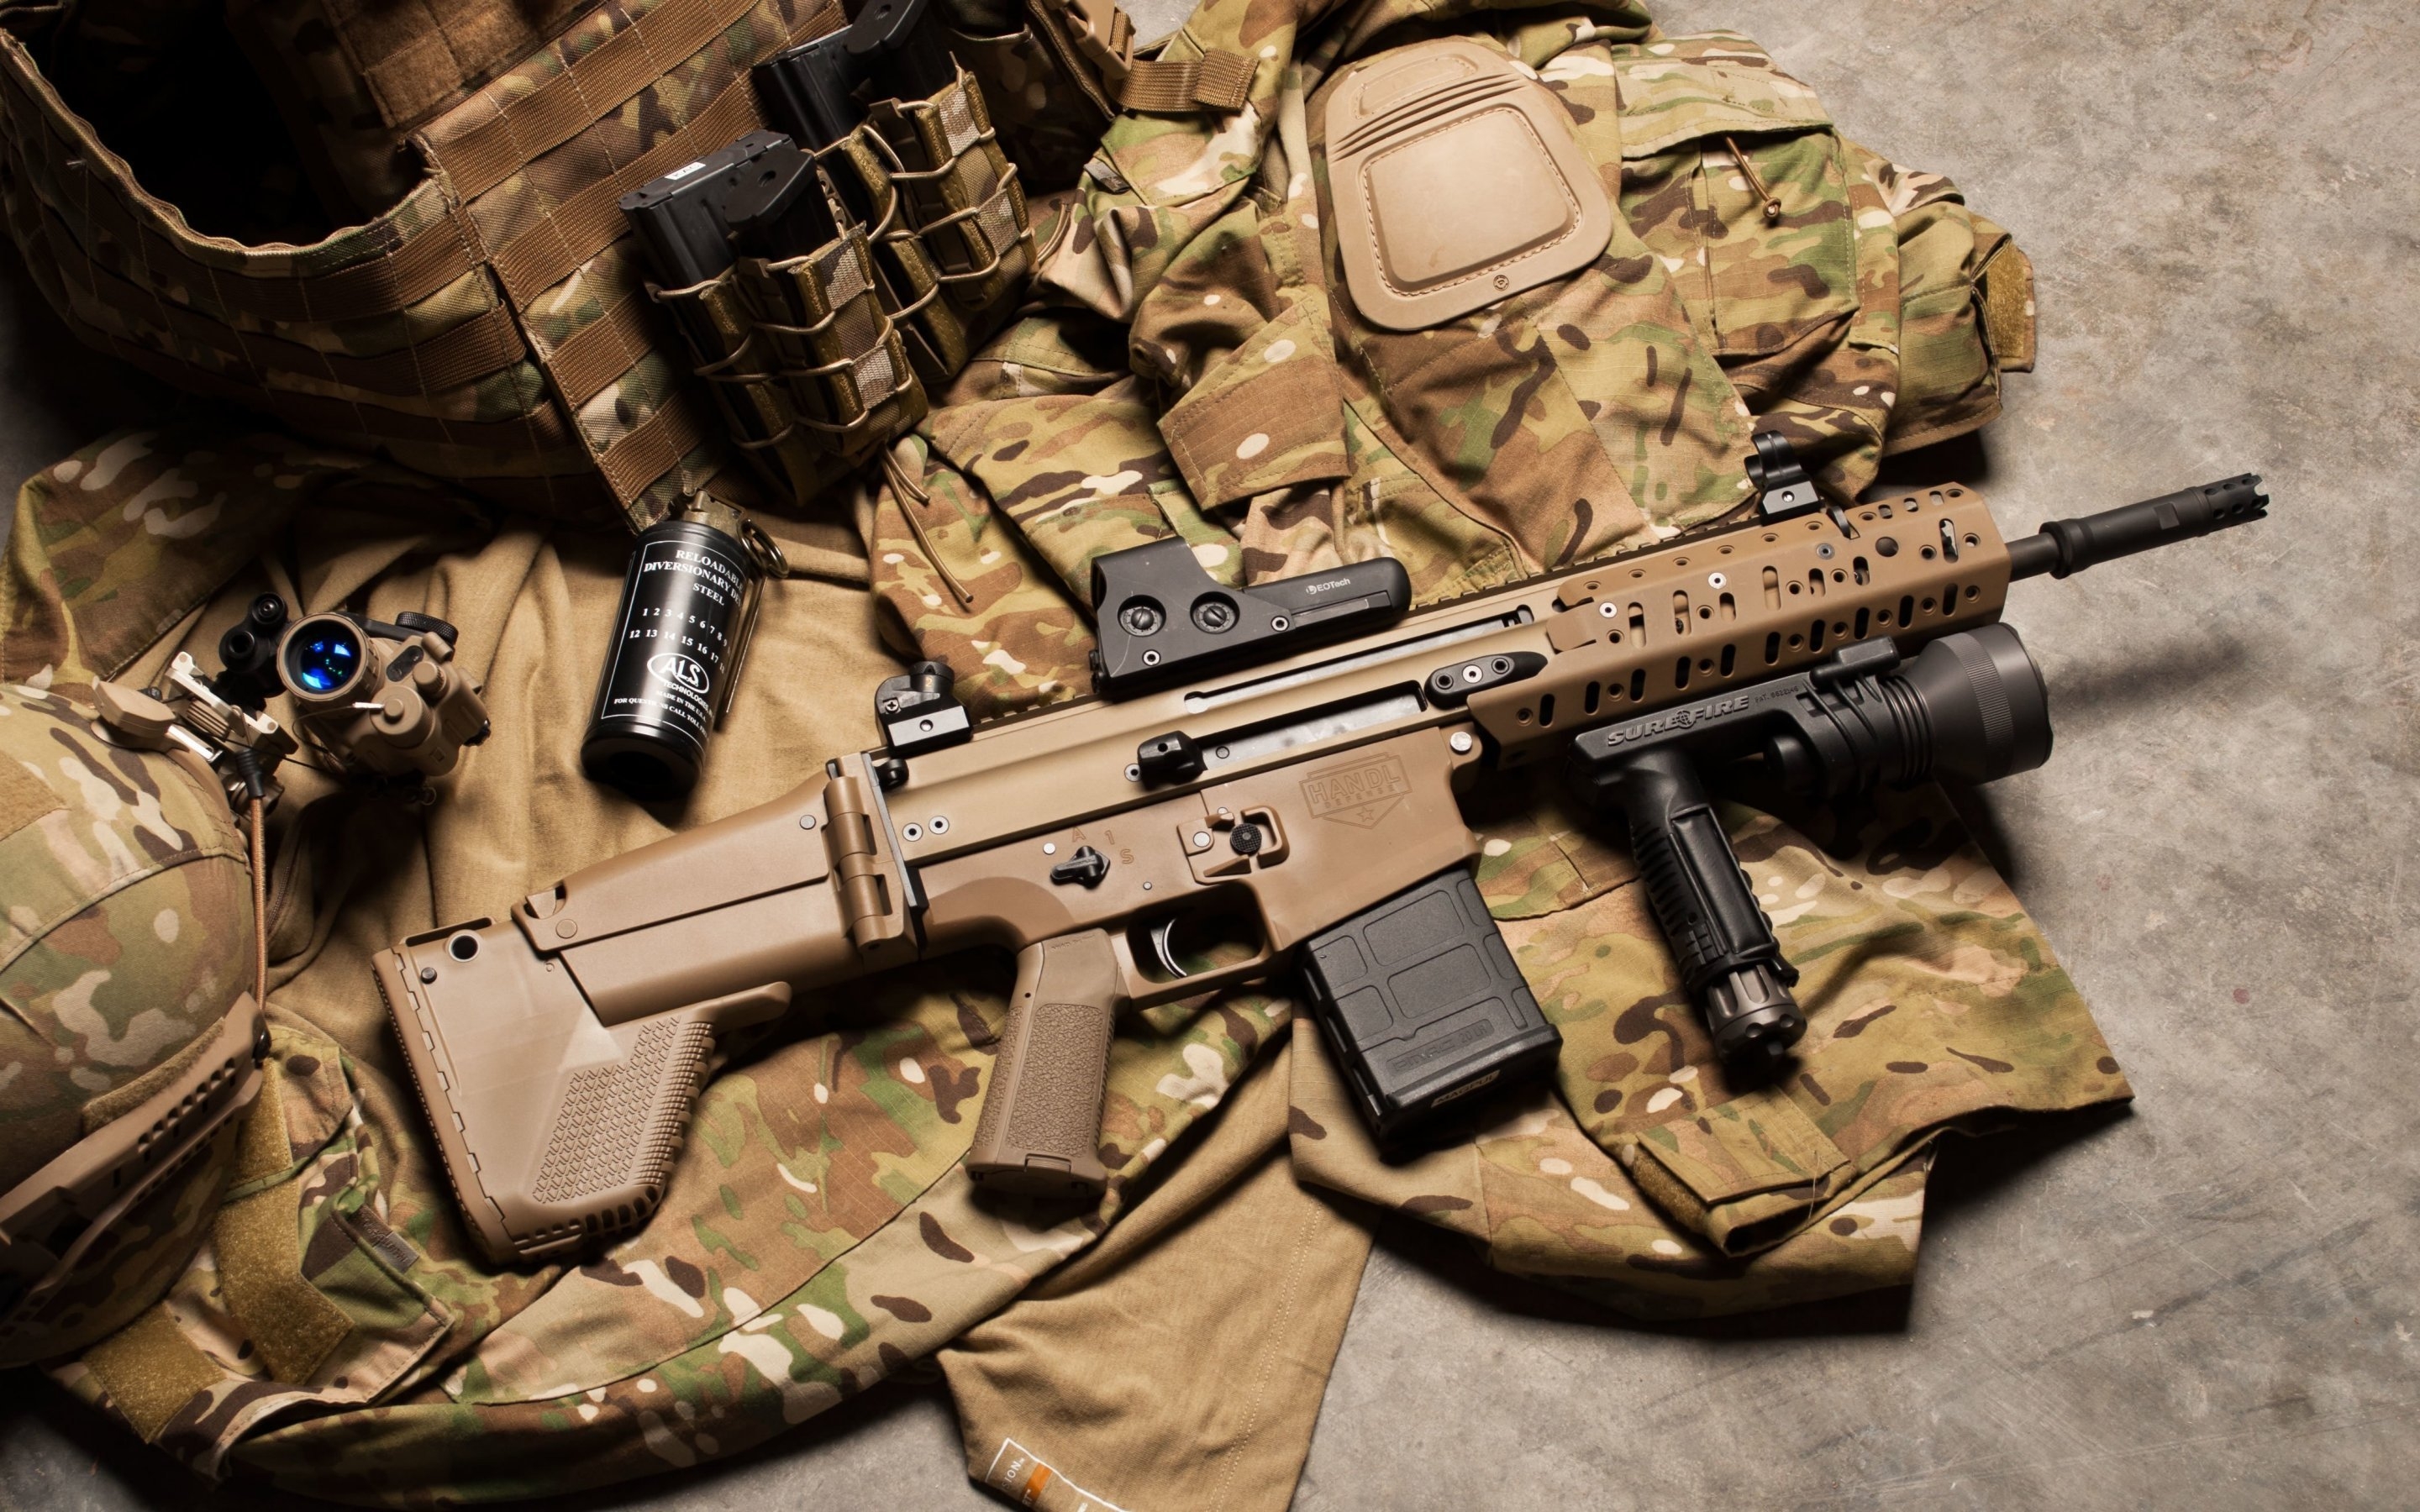 FN Scar Assault Rifle for 2880 x 1800 Retina Display resolution